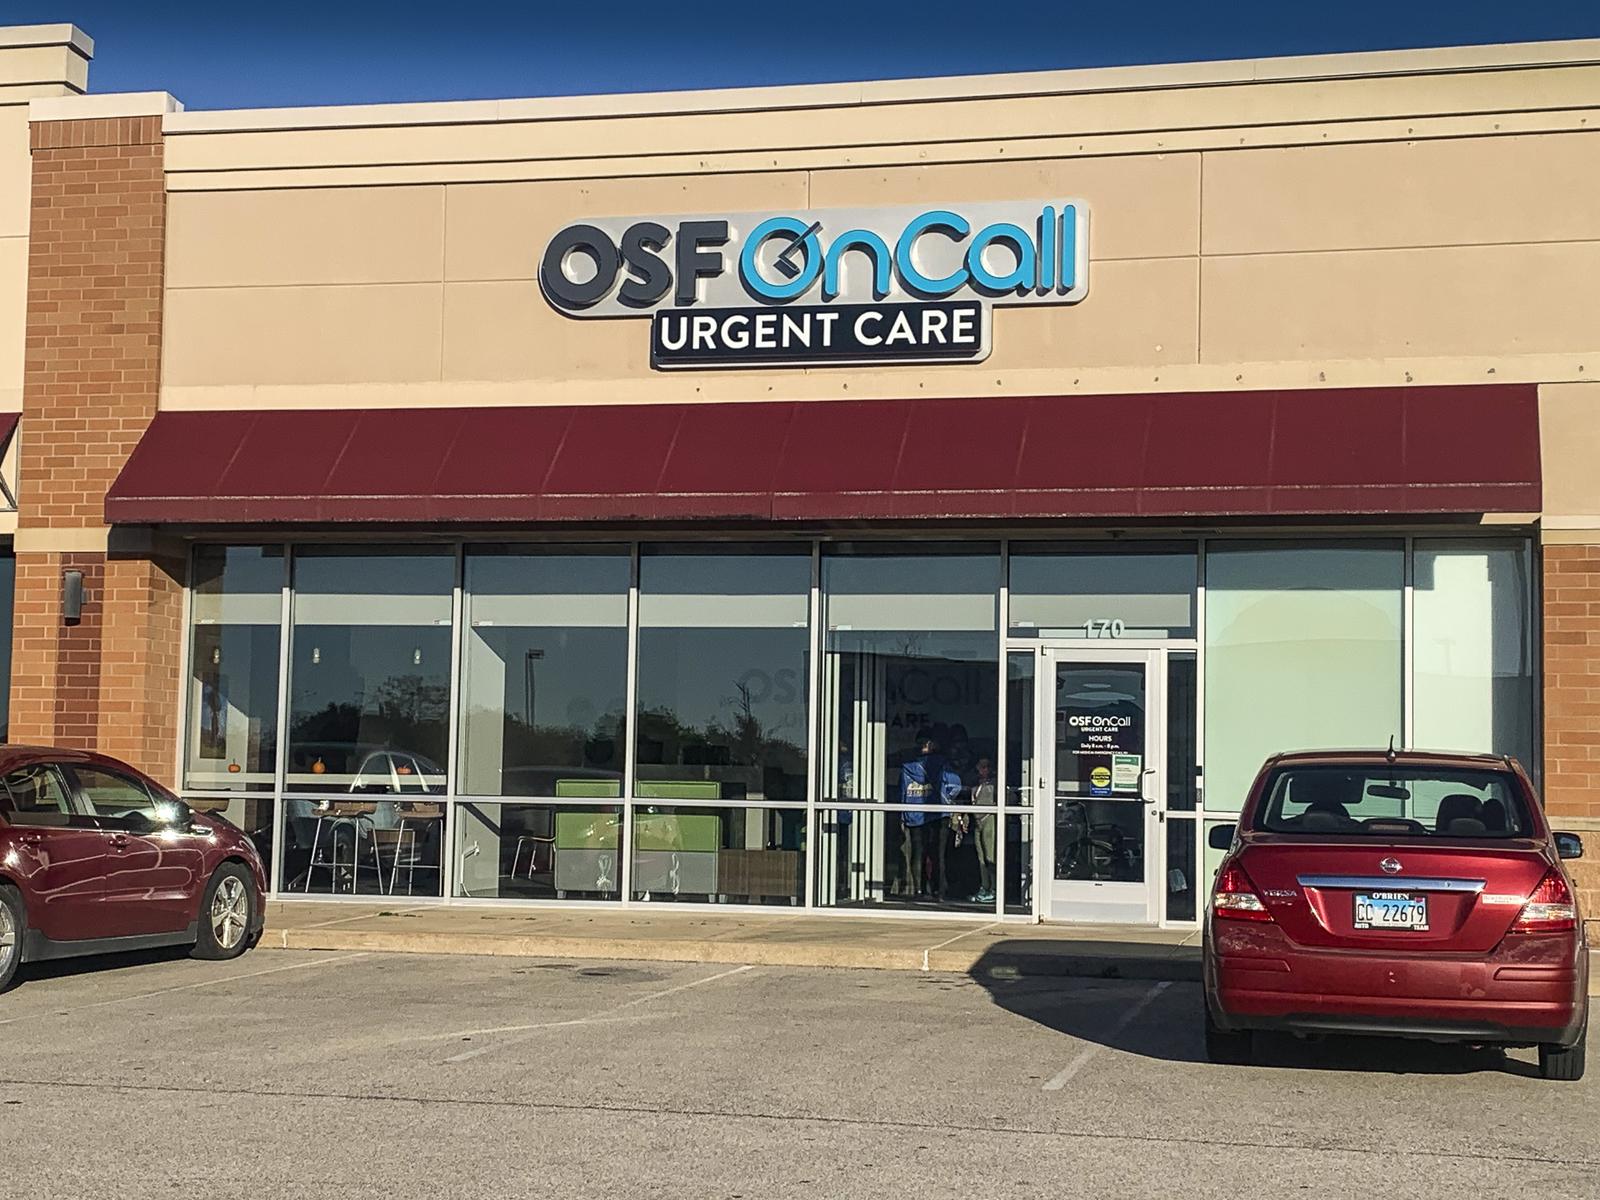 OSF OnCall Urgent Care, 1730 Bradford Lane, Normal, Illinois, 61761